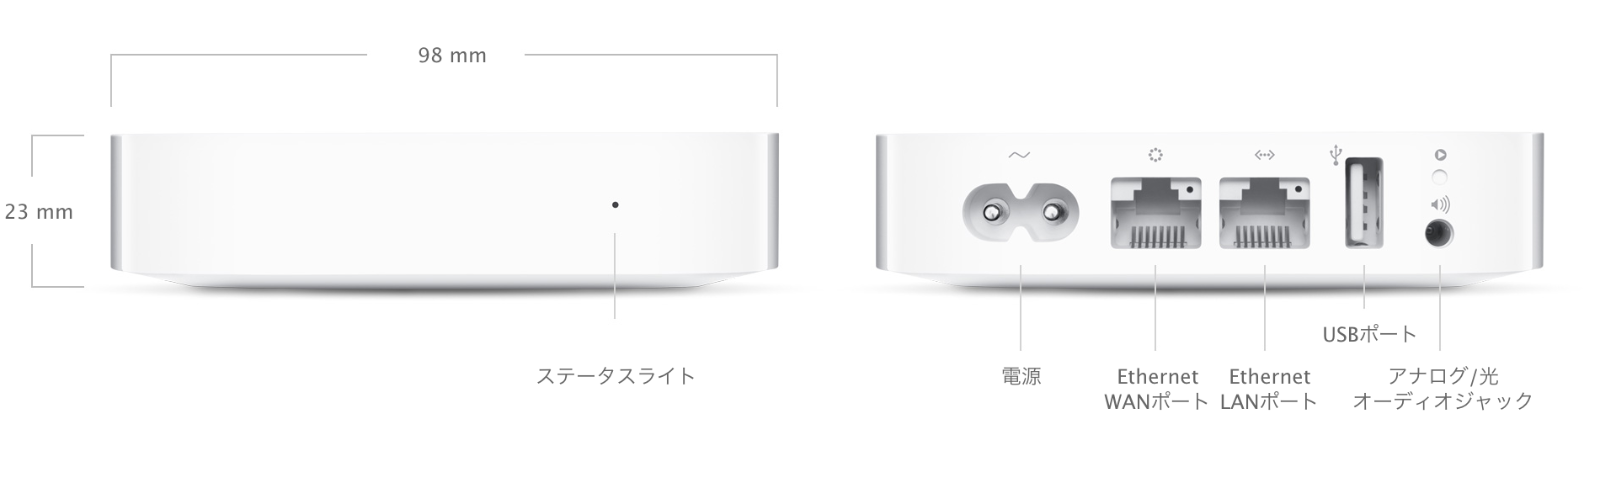 AirMac Express 802.11n (第2世代) - 技術仕様 (日本)